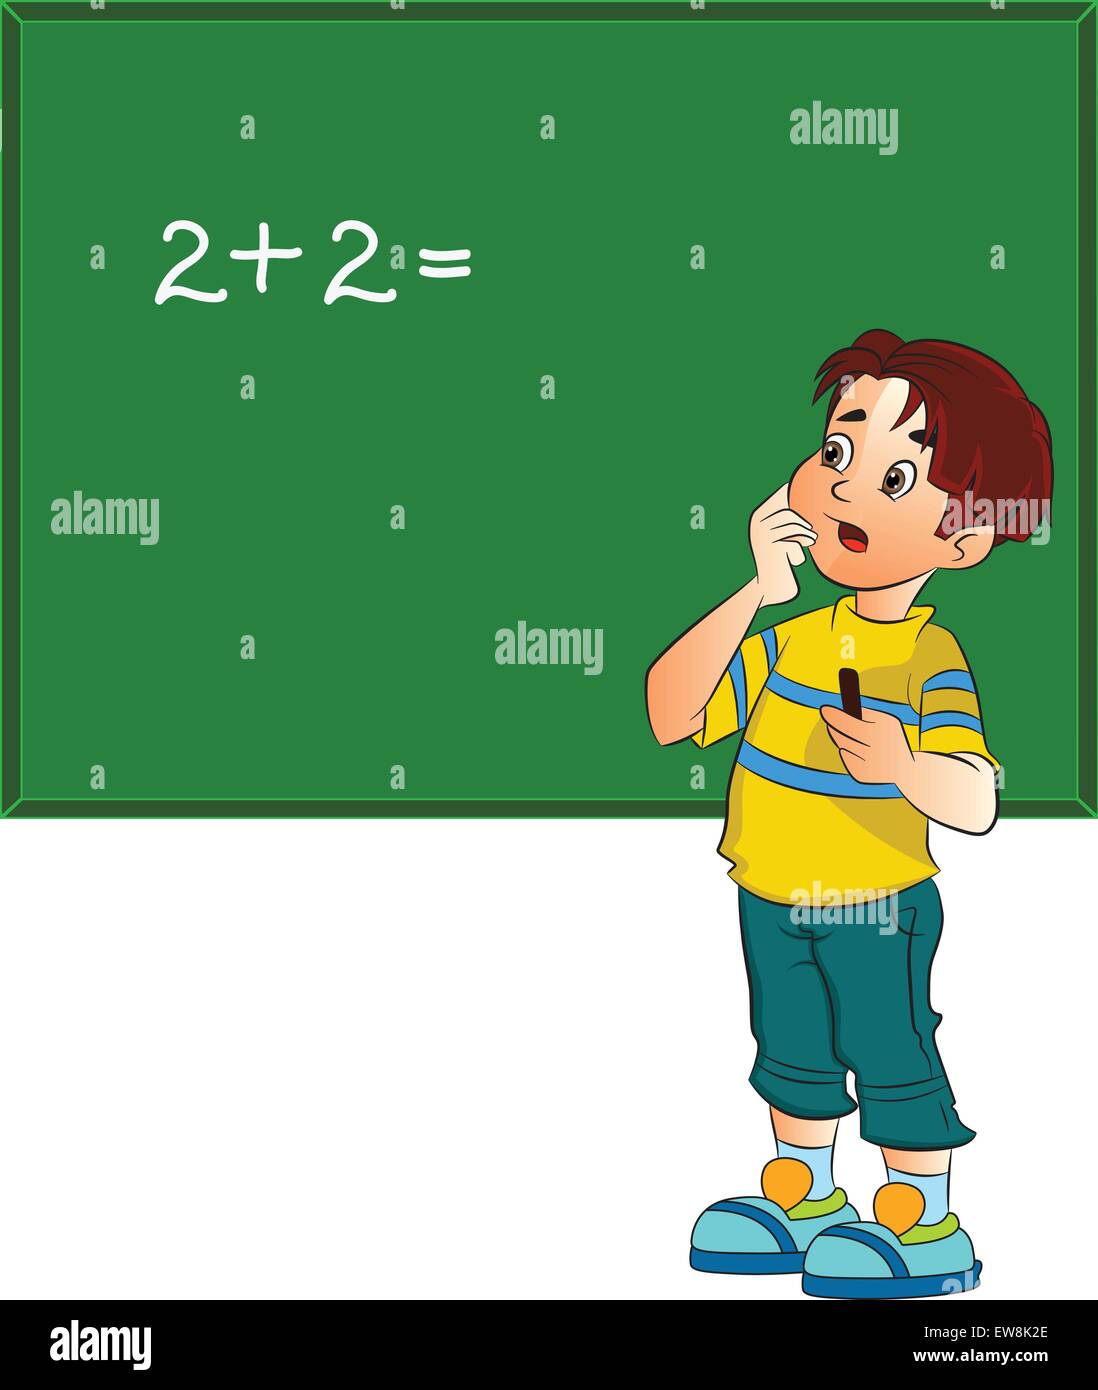 Boy Solving a Math Problem on a Chalkboard, illustration Stock Vector